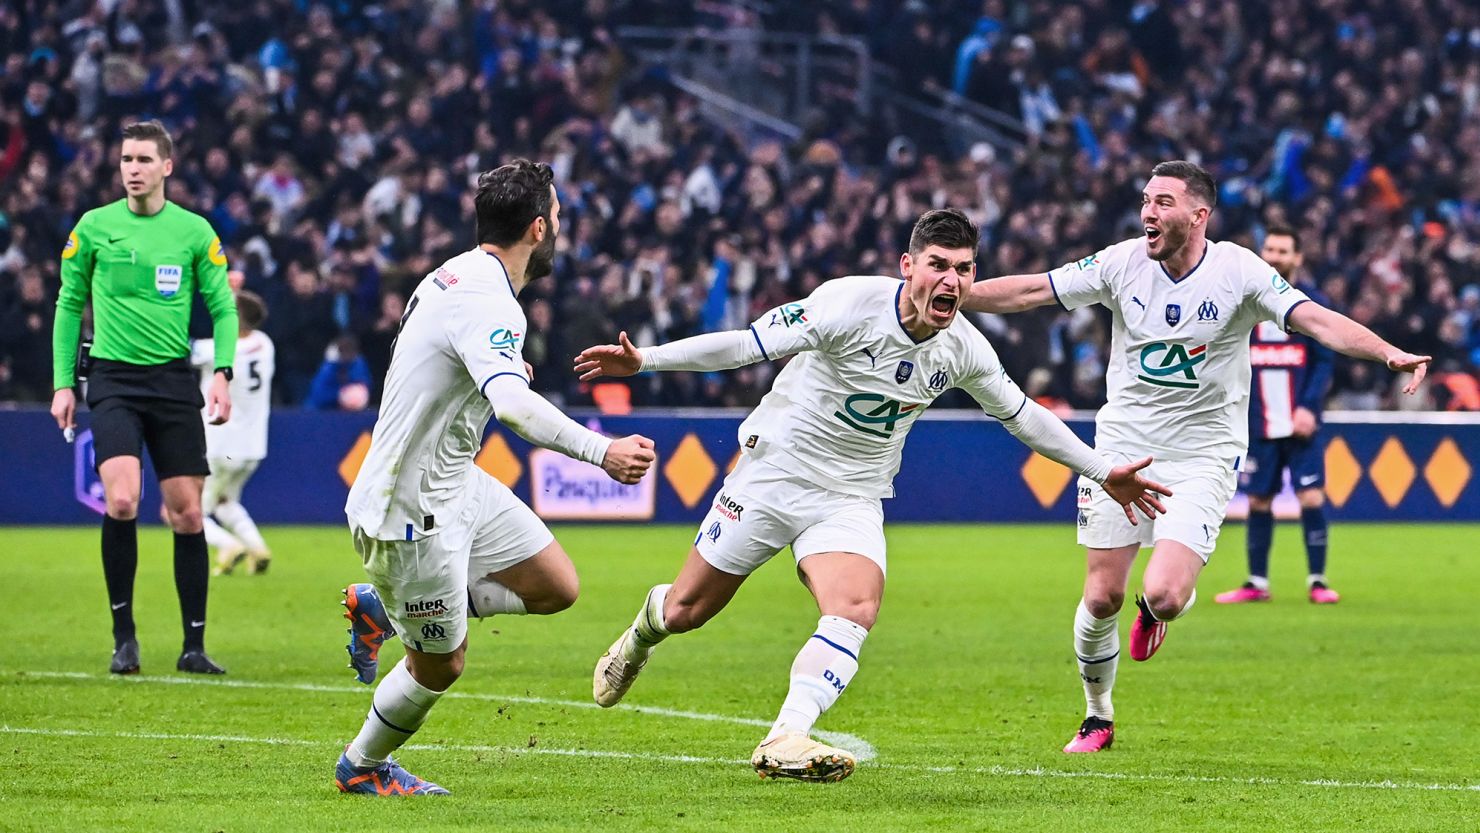 Ruslan Malinovskyi's goal knocked 14-time Coupe de France winner Paris Saint-Germain out of the tournament. 